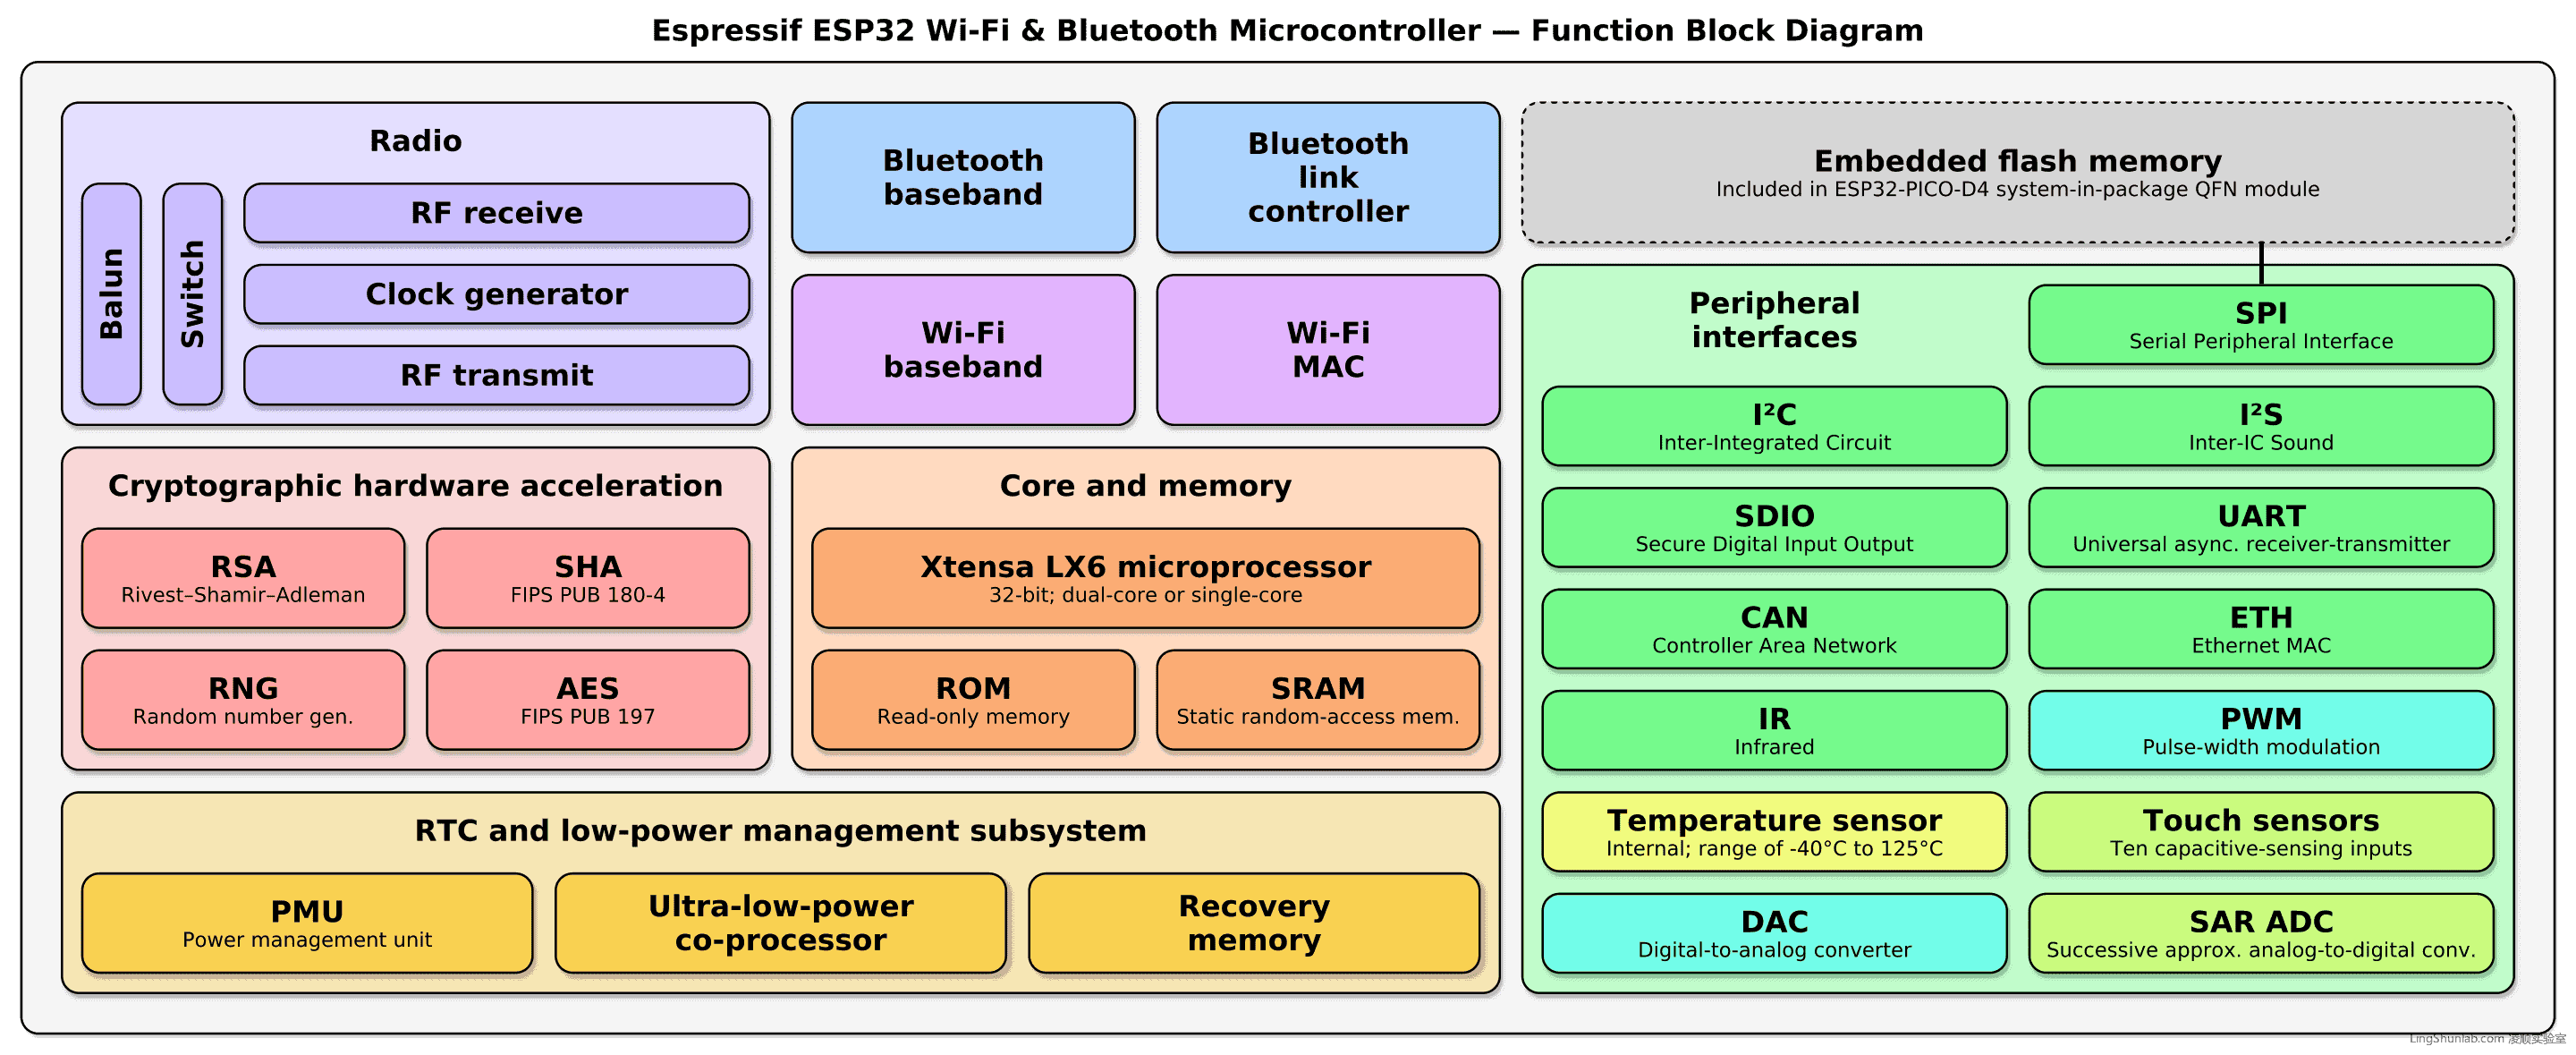 2880px-Espressif_ESP32_Chip_Function_Block_Diagram.svg